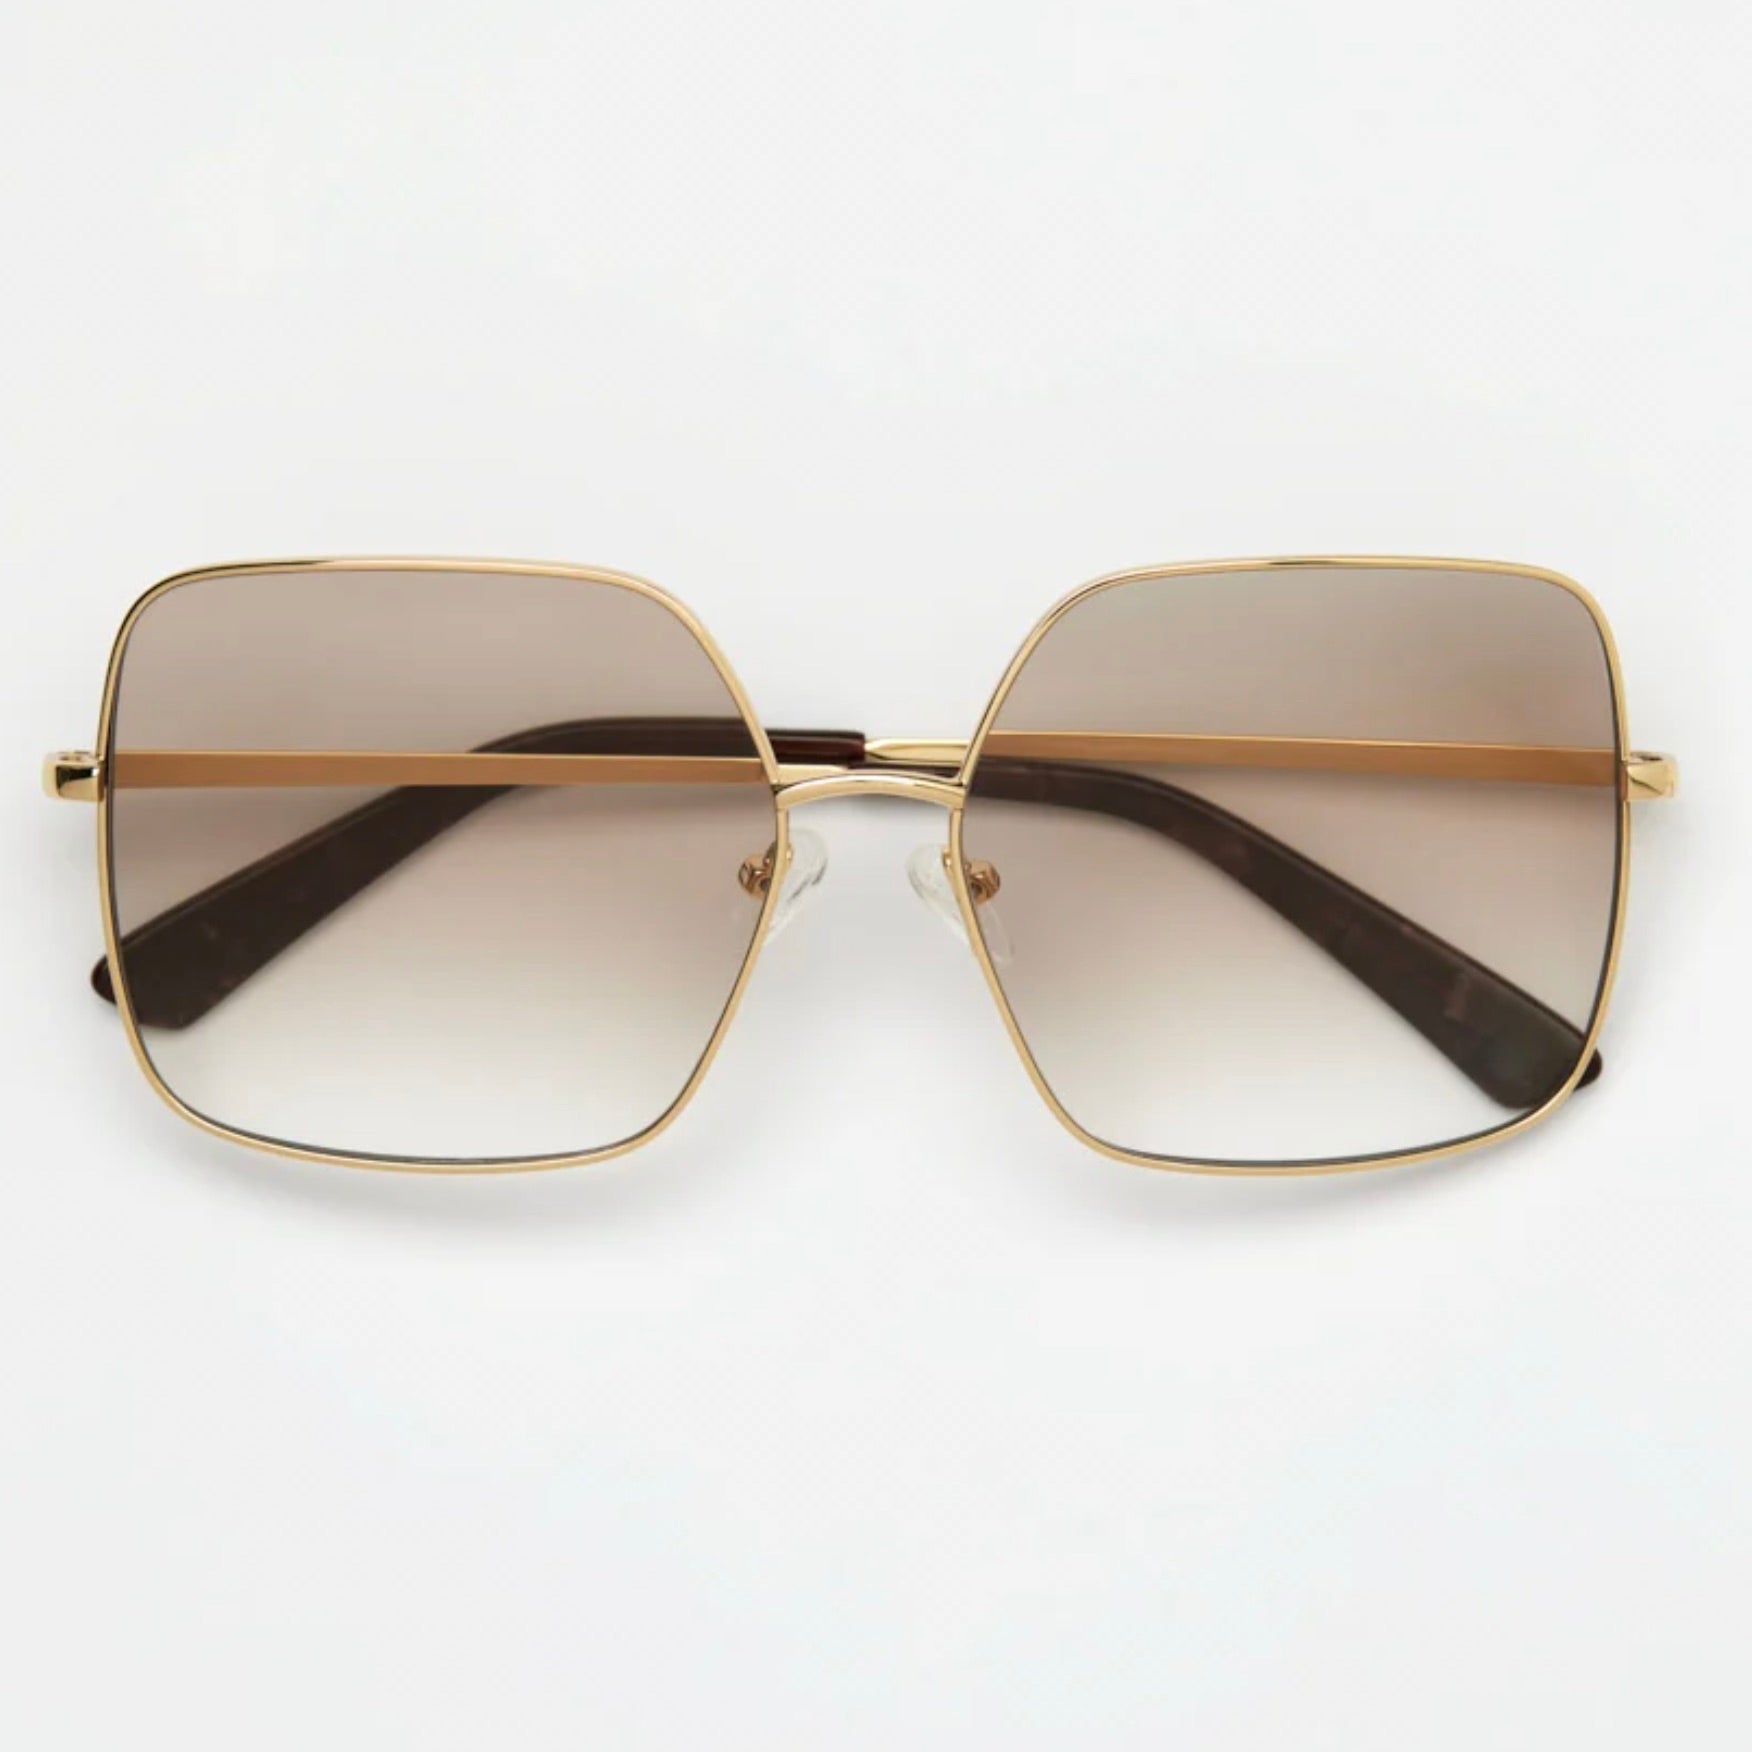 Gold Billie Reader Sunglasses